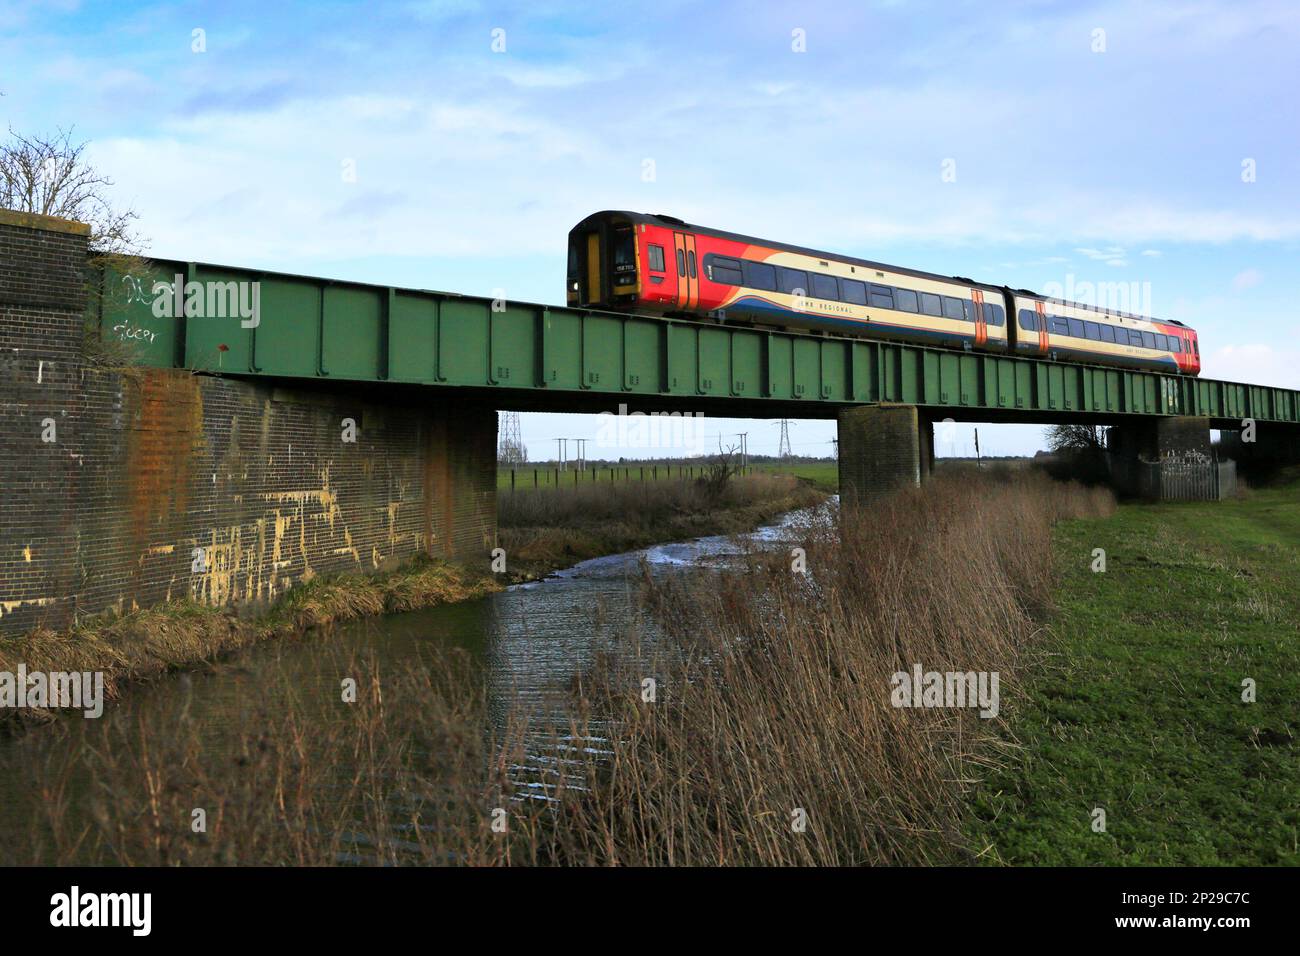 East Midlands Regional train 158788 near Whittlesey town, Fenland, Cambridgeshire, England Stock Photo